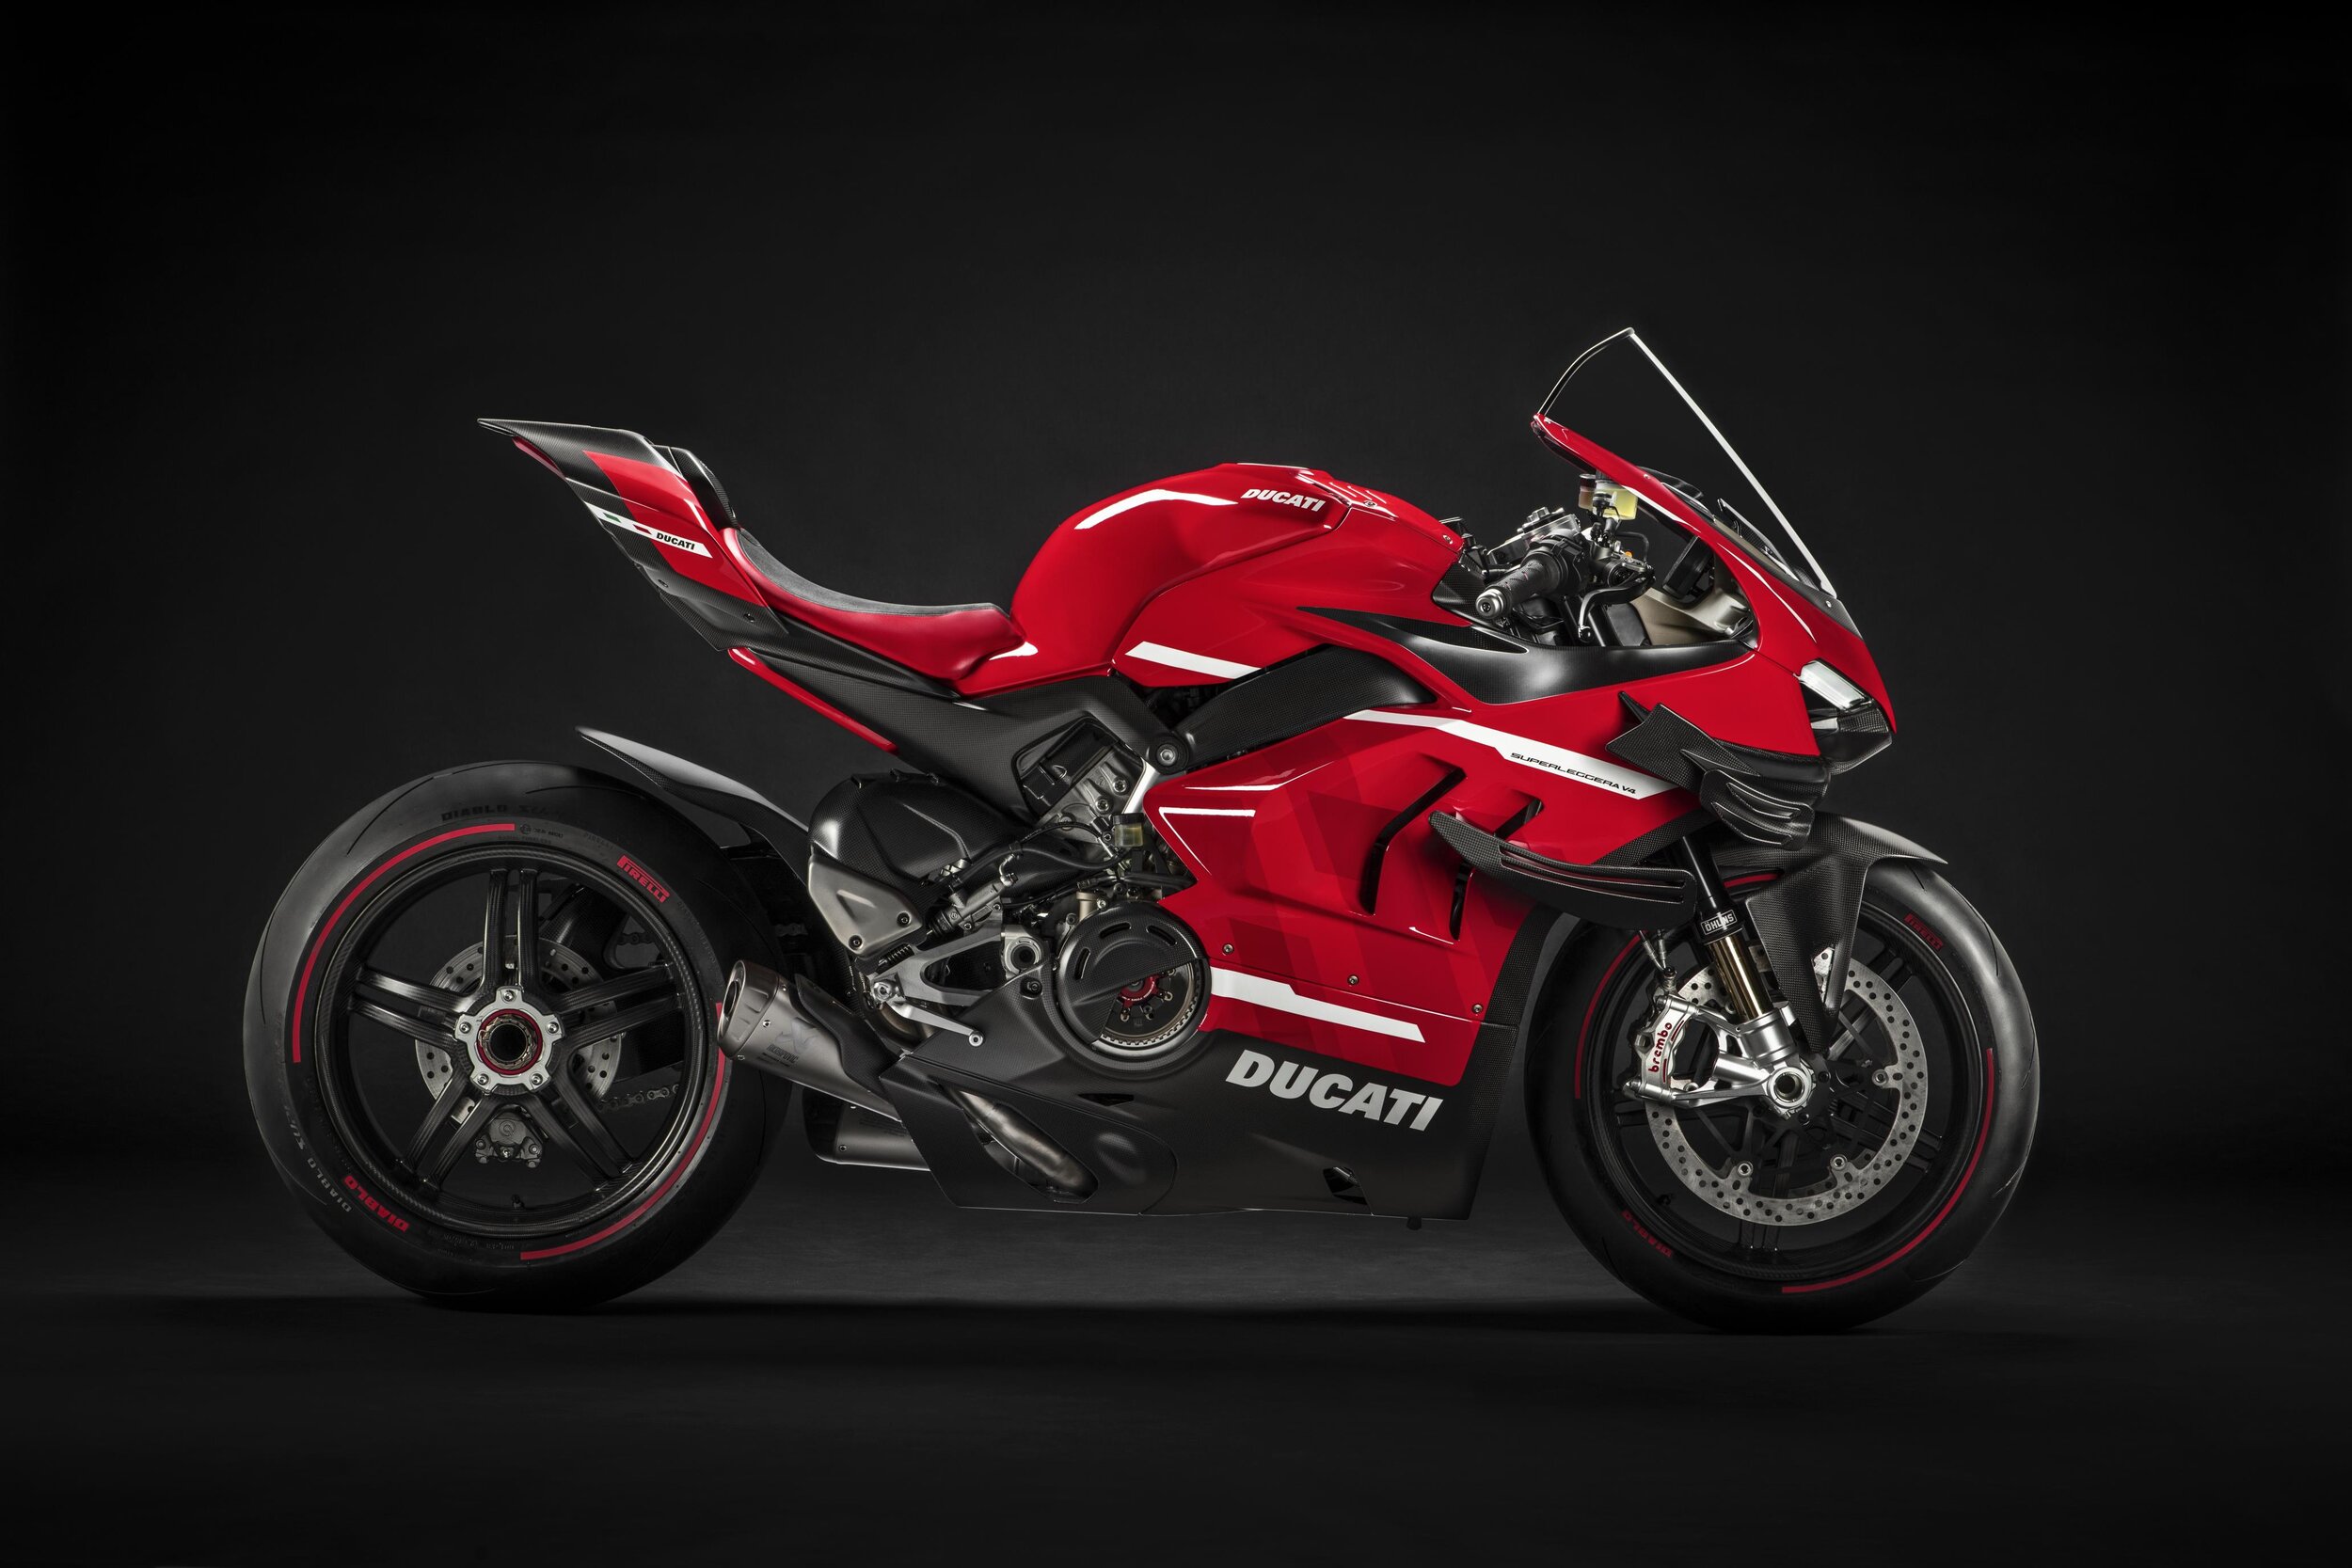 02_Ducati Superleggera V4_UC145954_High.jpg